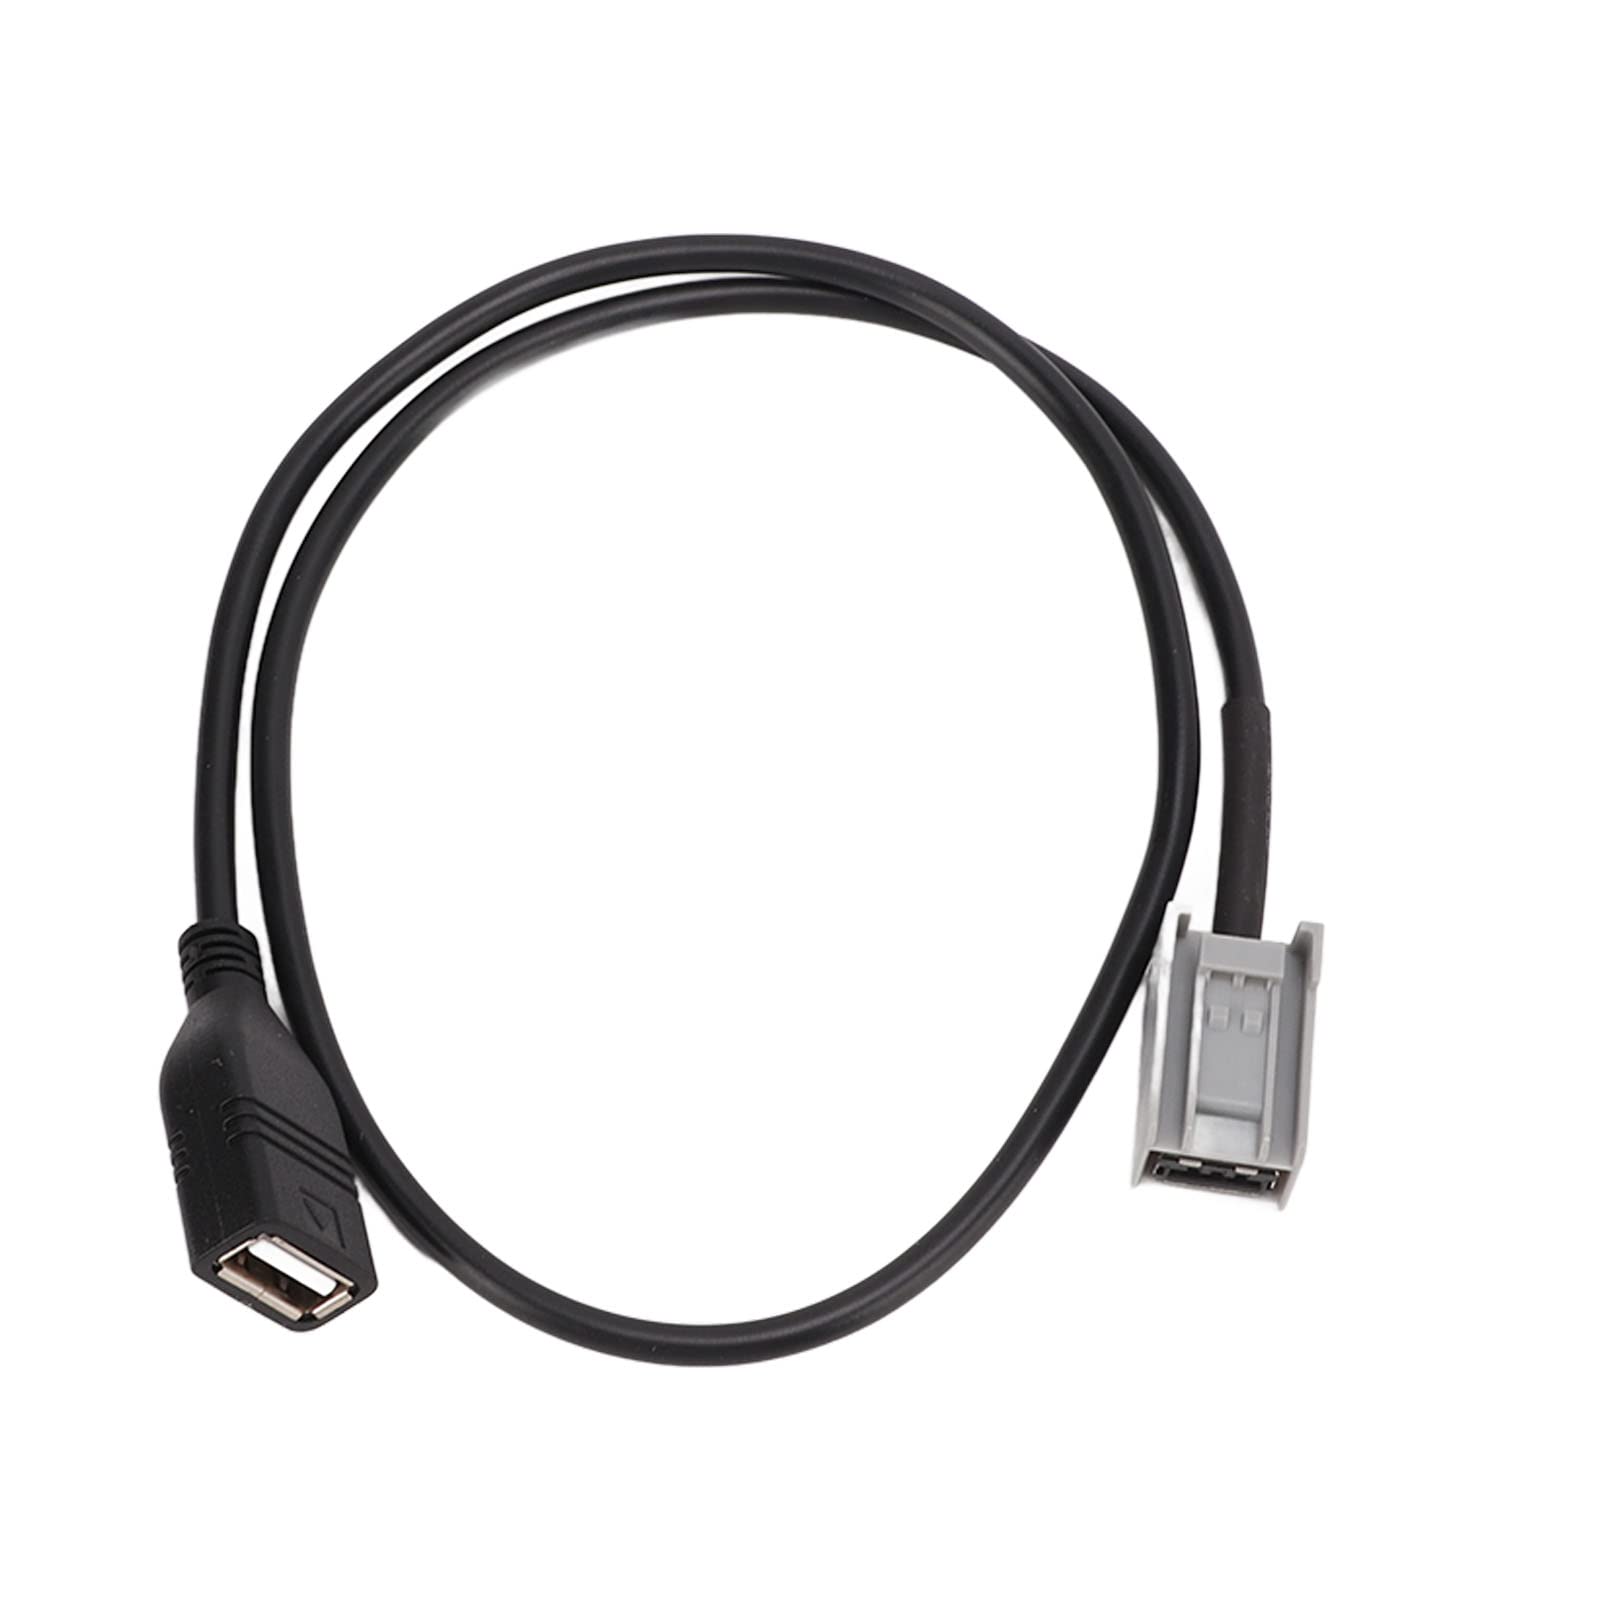 Yosoo Auto-o-USB-Adapterkabel o-USB-Adapterkabel Unterstützt MP3 WMA WAV Autoradio USB-Kabel Adapter USB-Verbindungskit, Ersatz für Outlander ASX Lancer von Yosoo